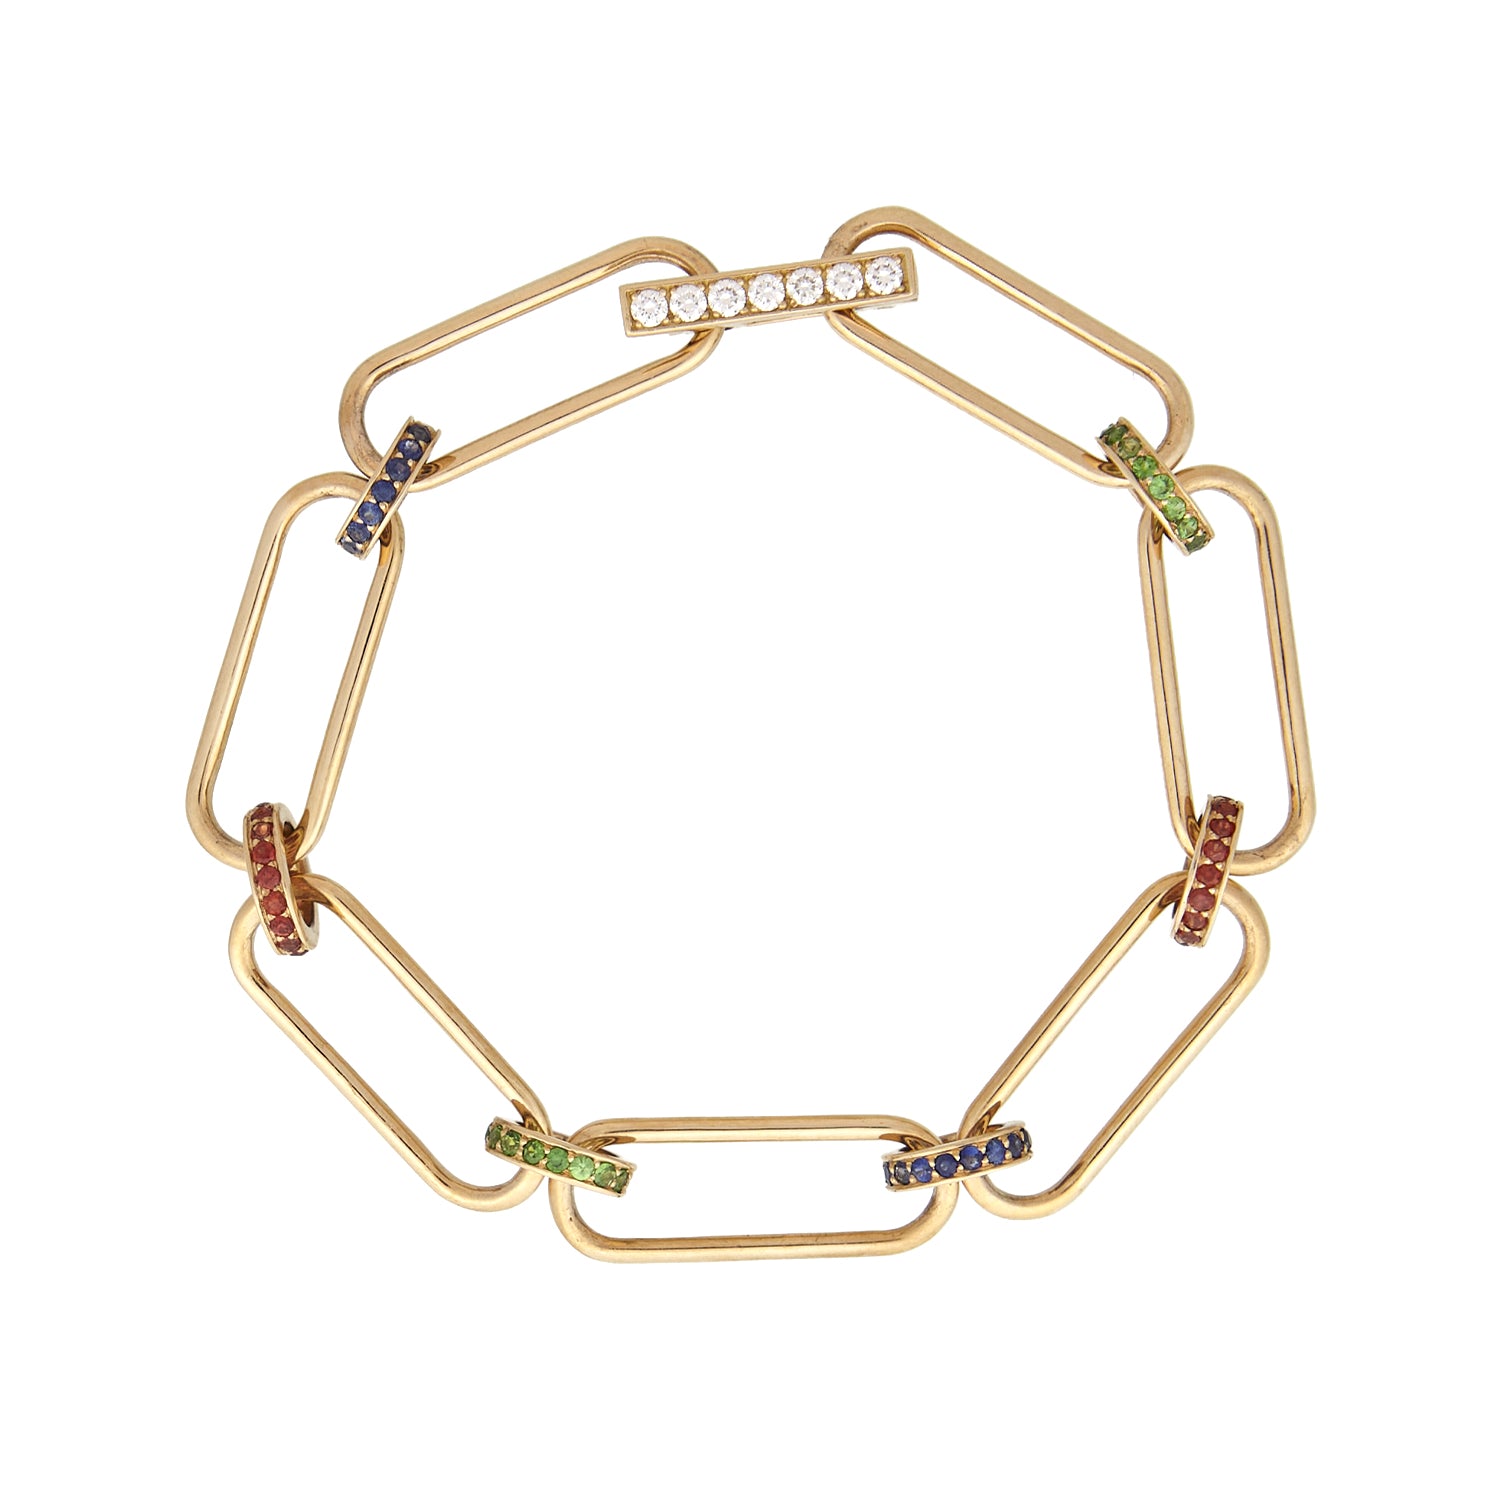 Rose gold papar clip bracelet with ruby, sapphire and tsavorite